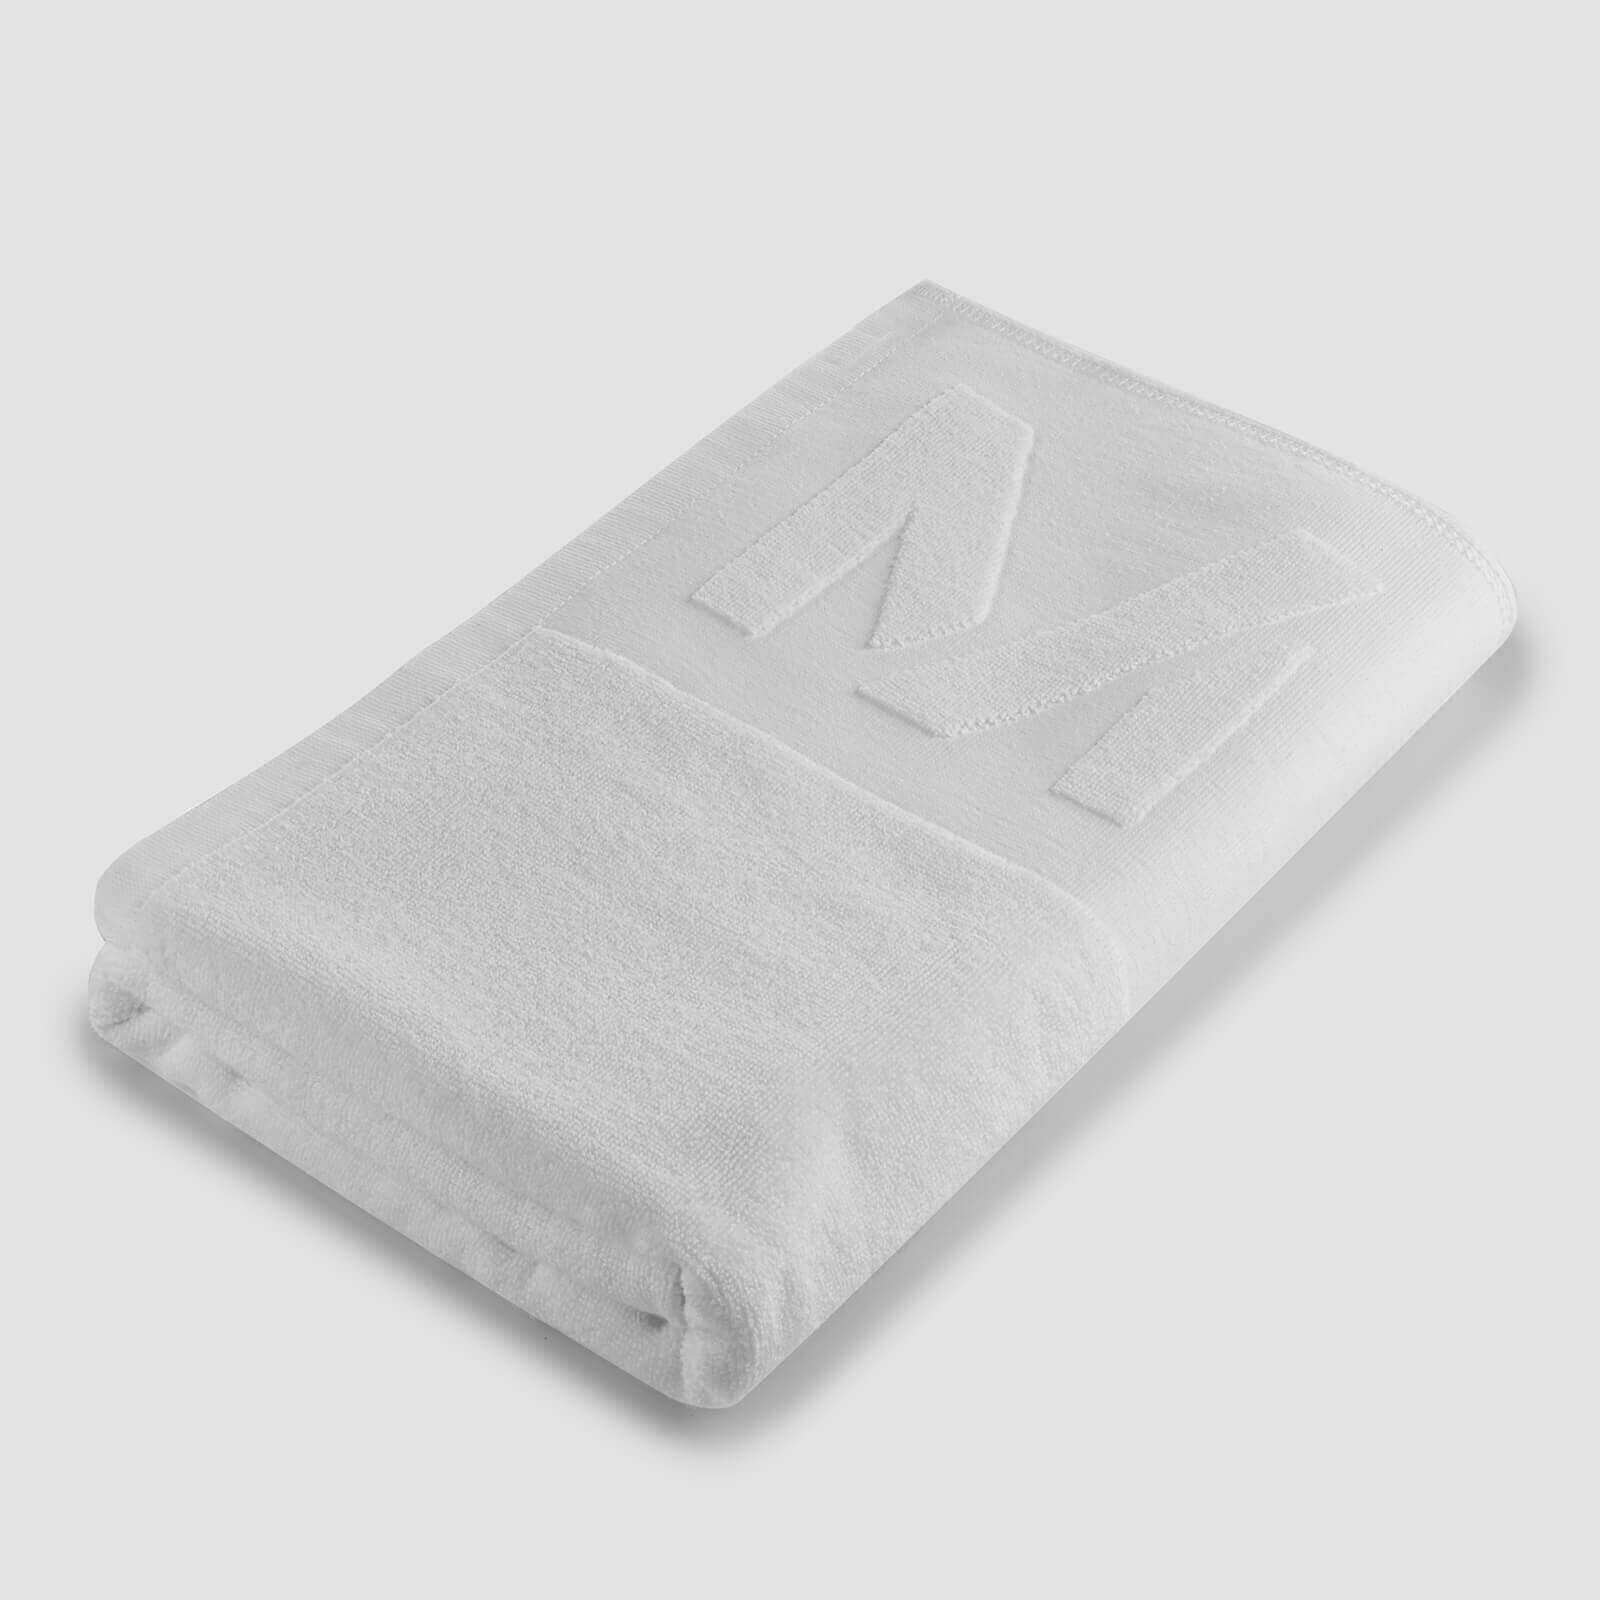 Myprotein Large Towel - White